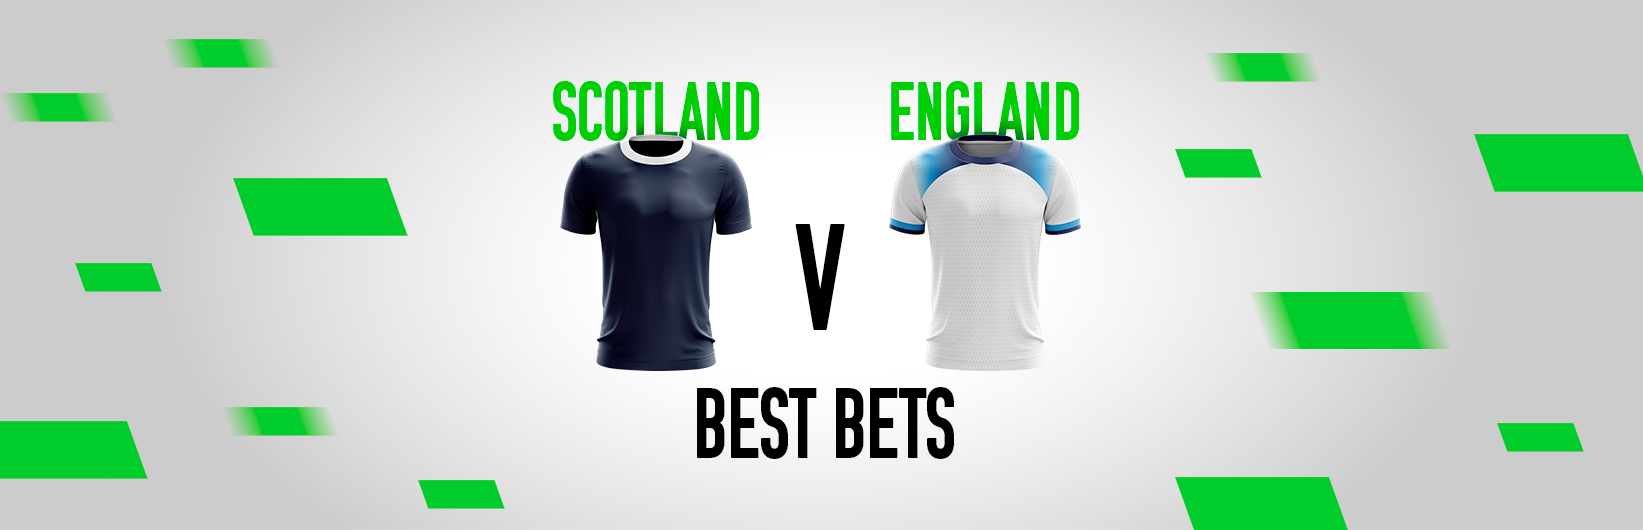 Football tips: Best bets for Scotland v England